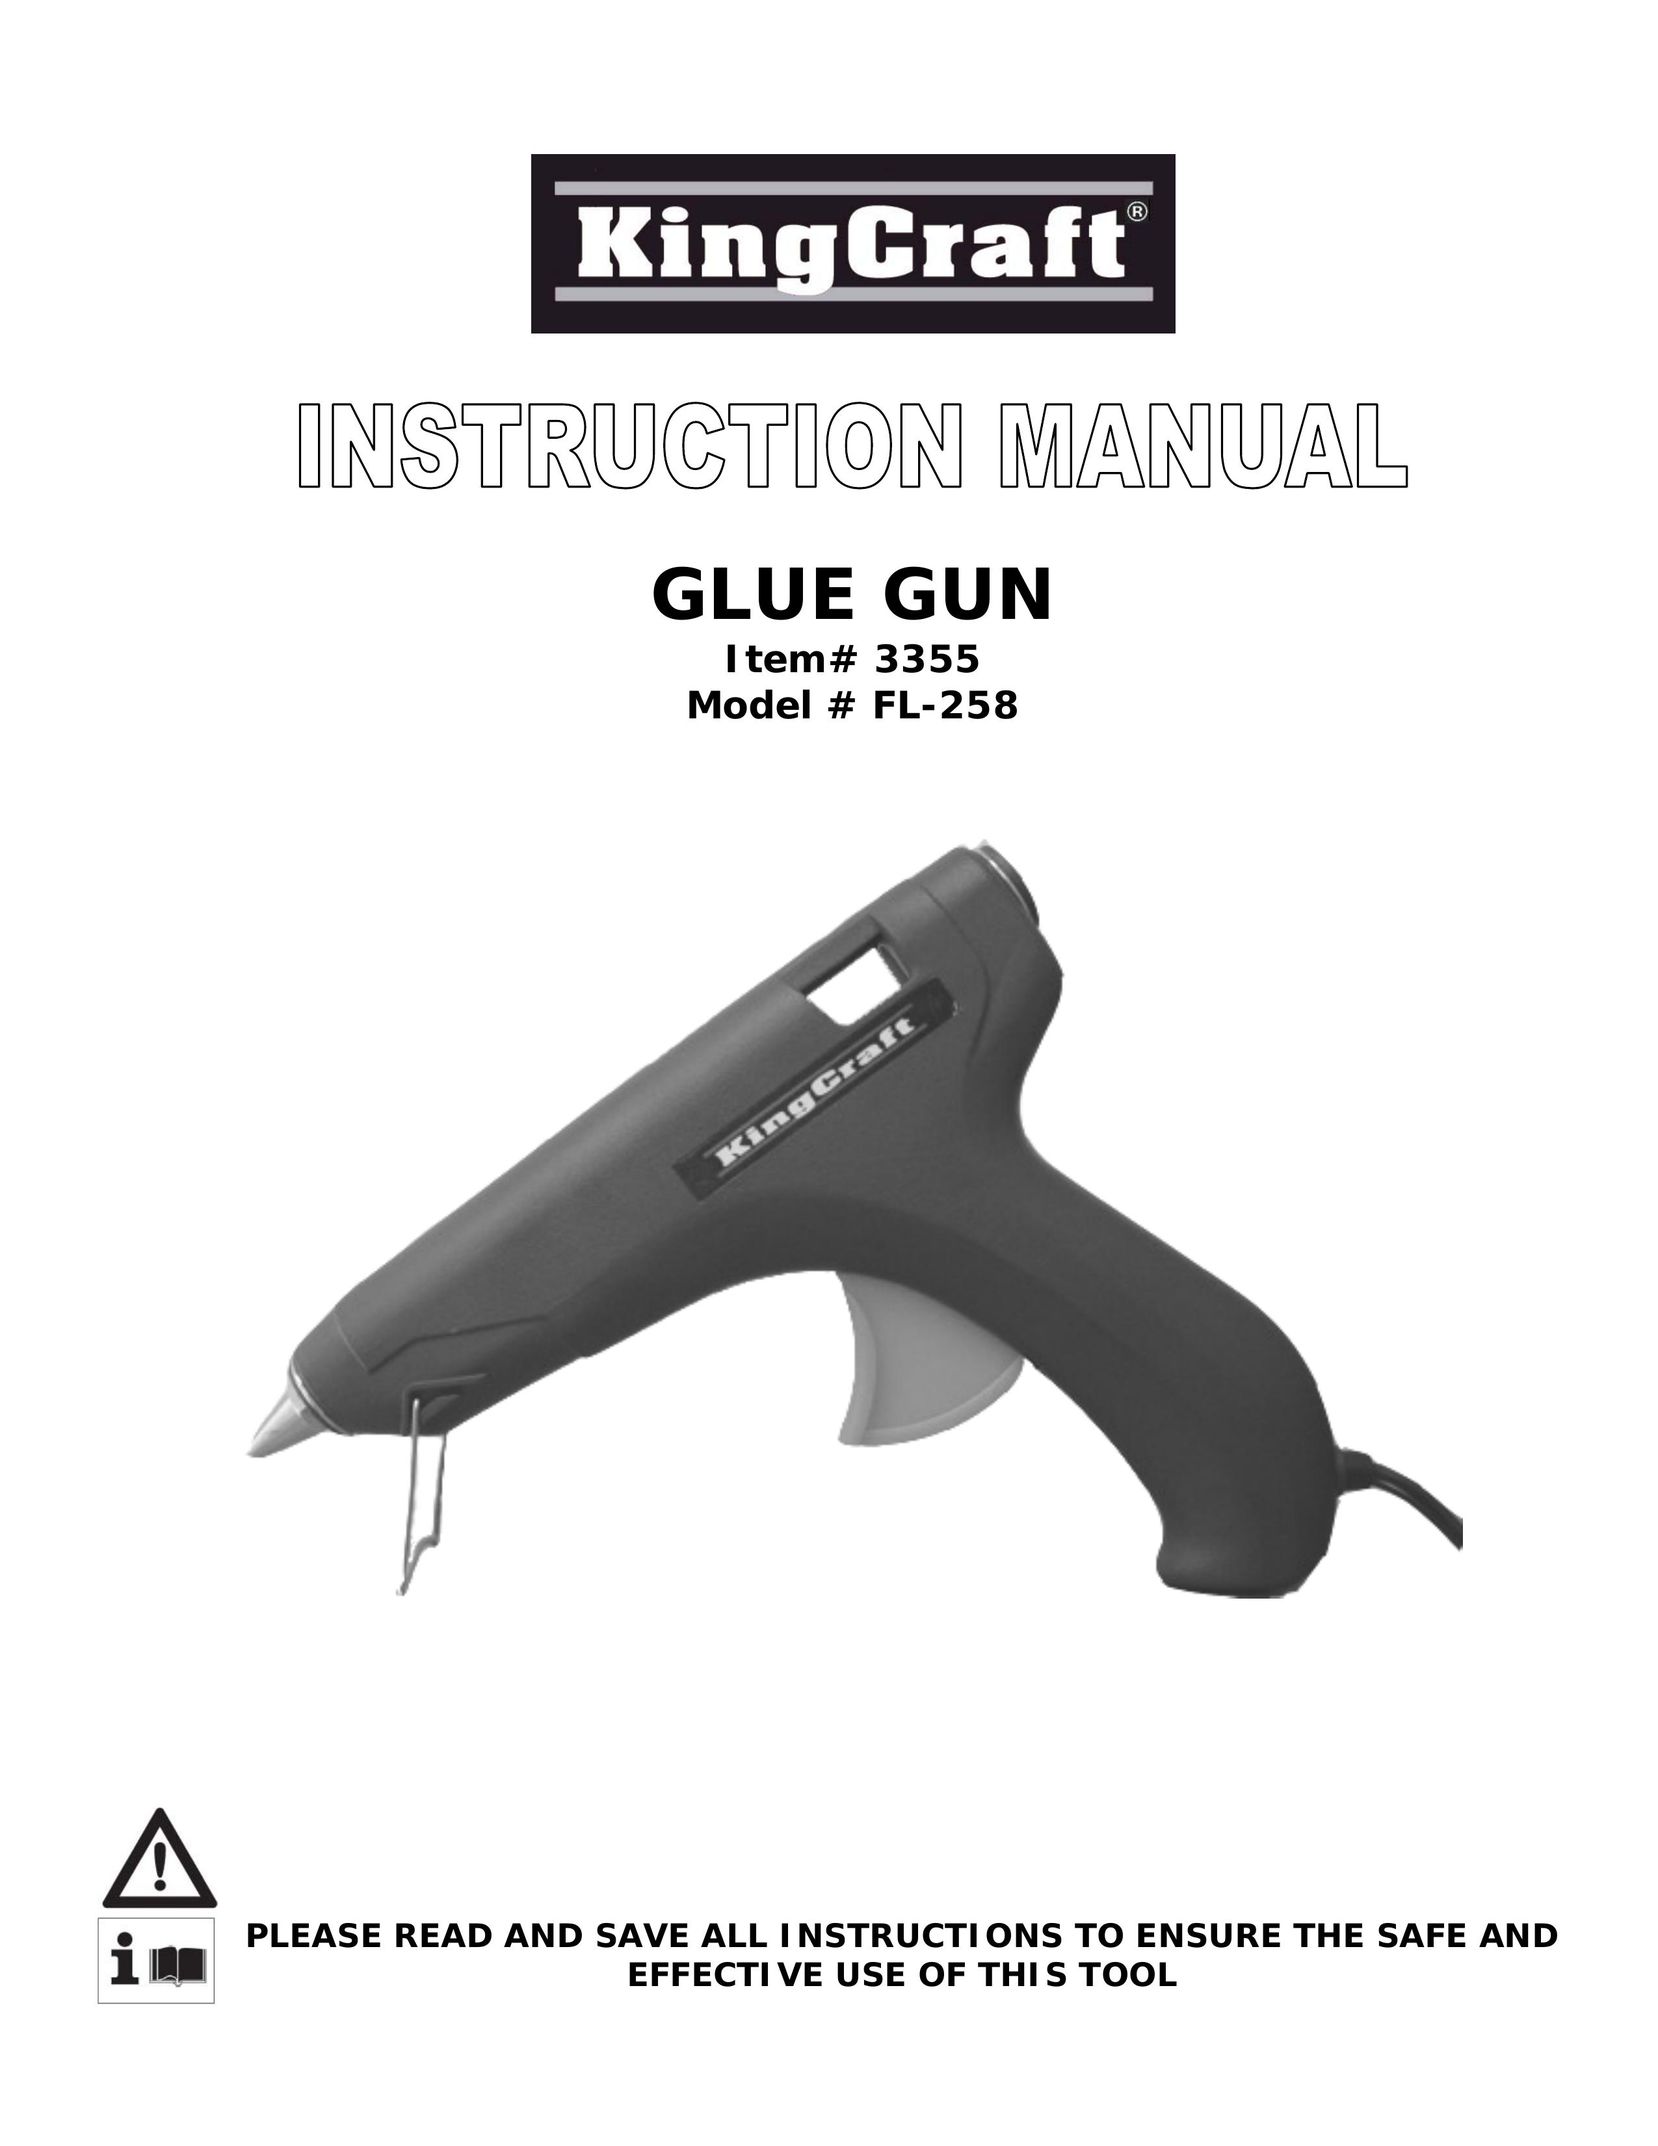 Wachsmuth & Krogmann FL-258 Glue Gun User Manual